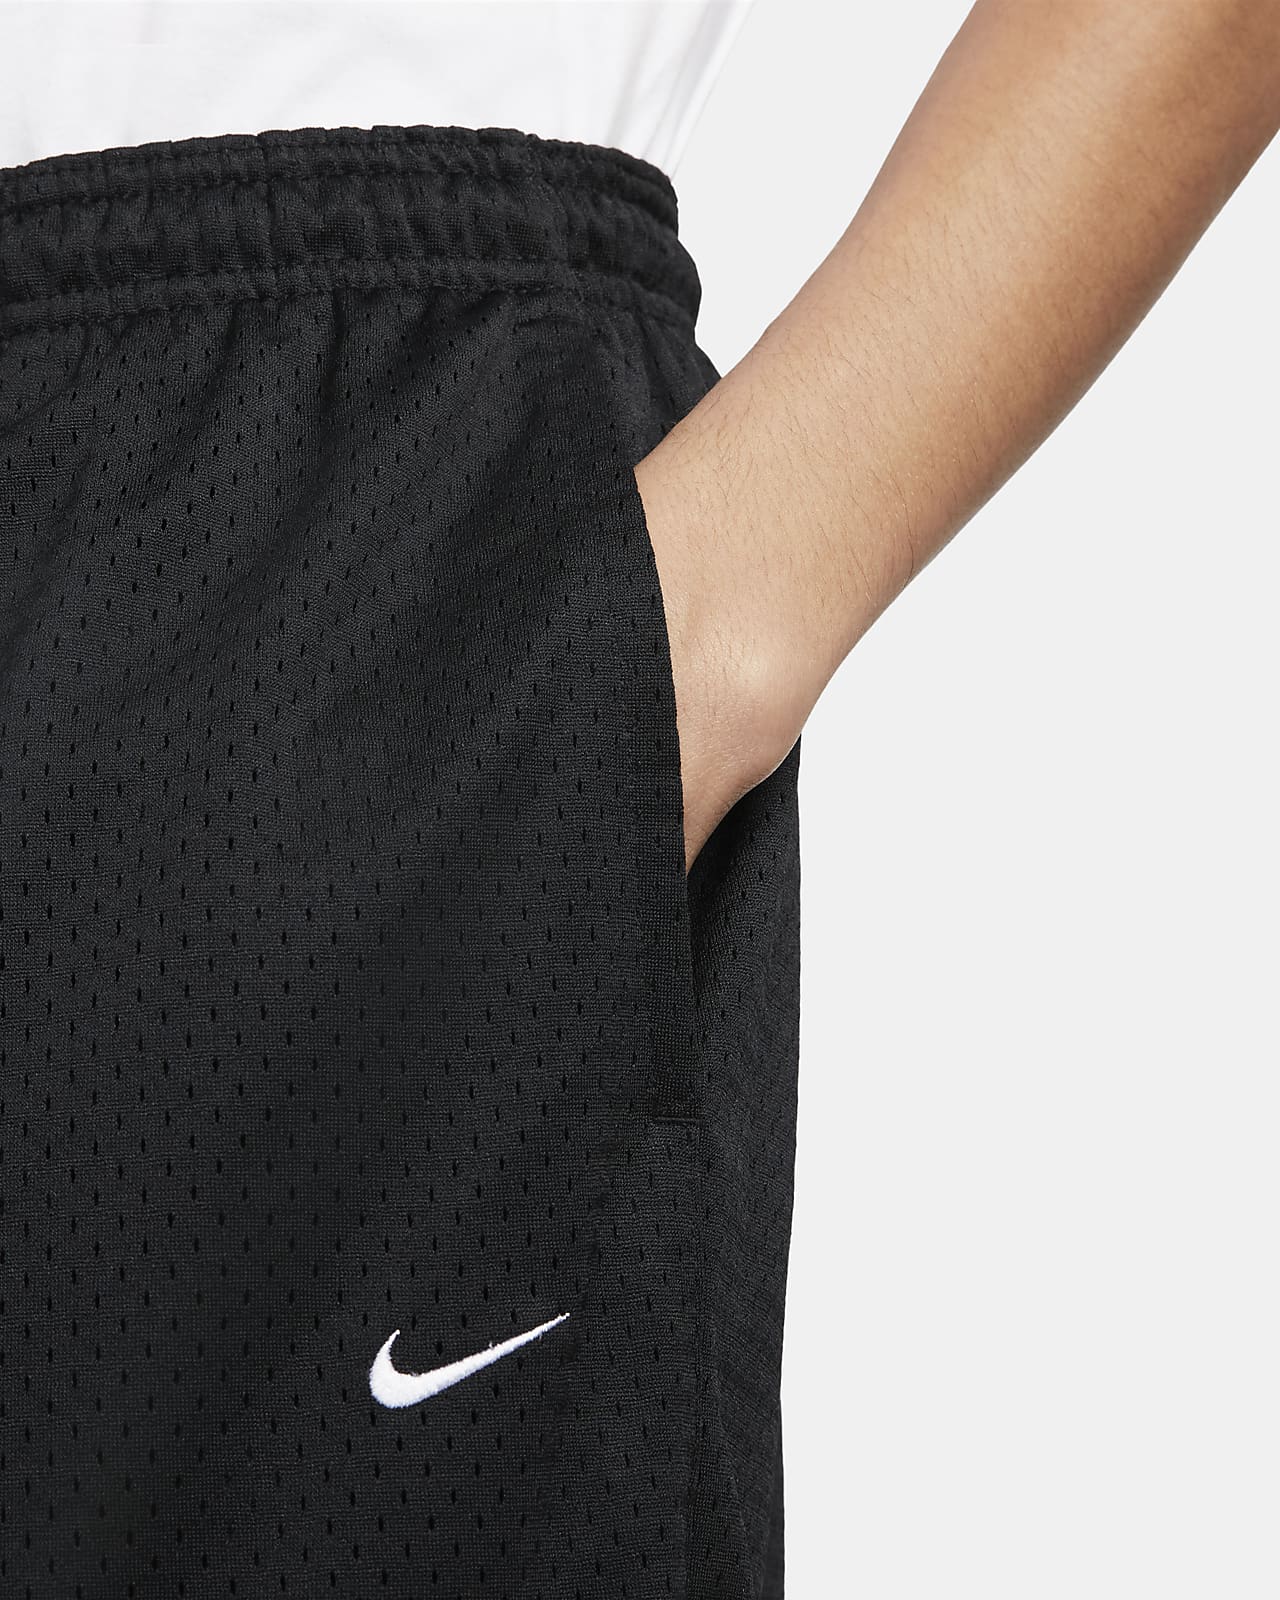 Nike Sportswear Authentics Men's Shorts. Nike LU